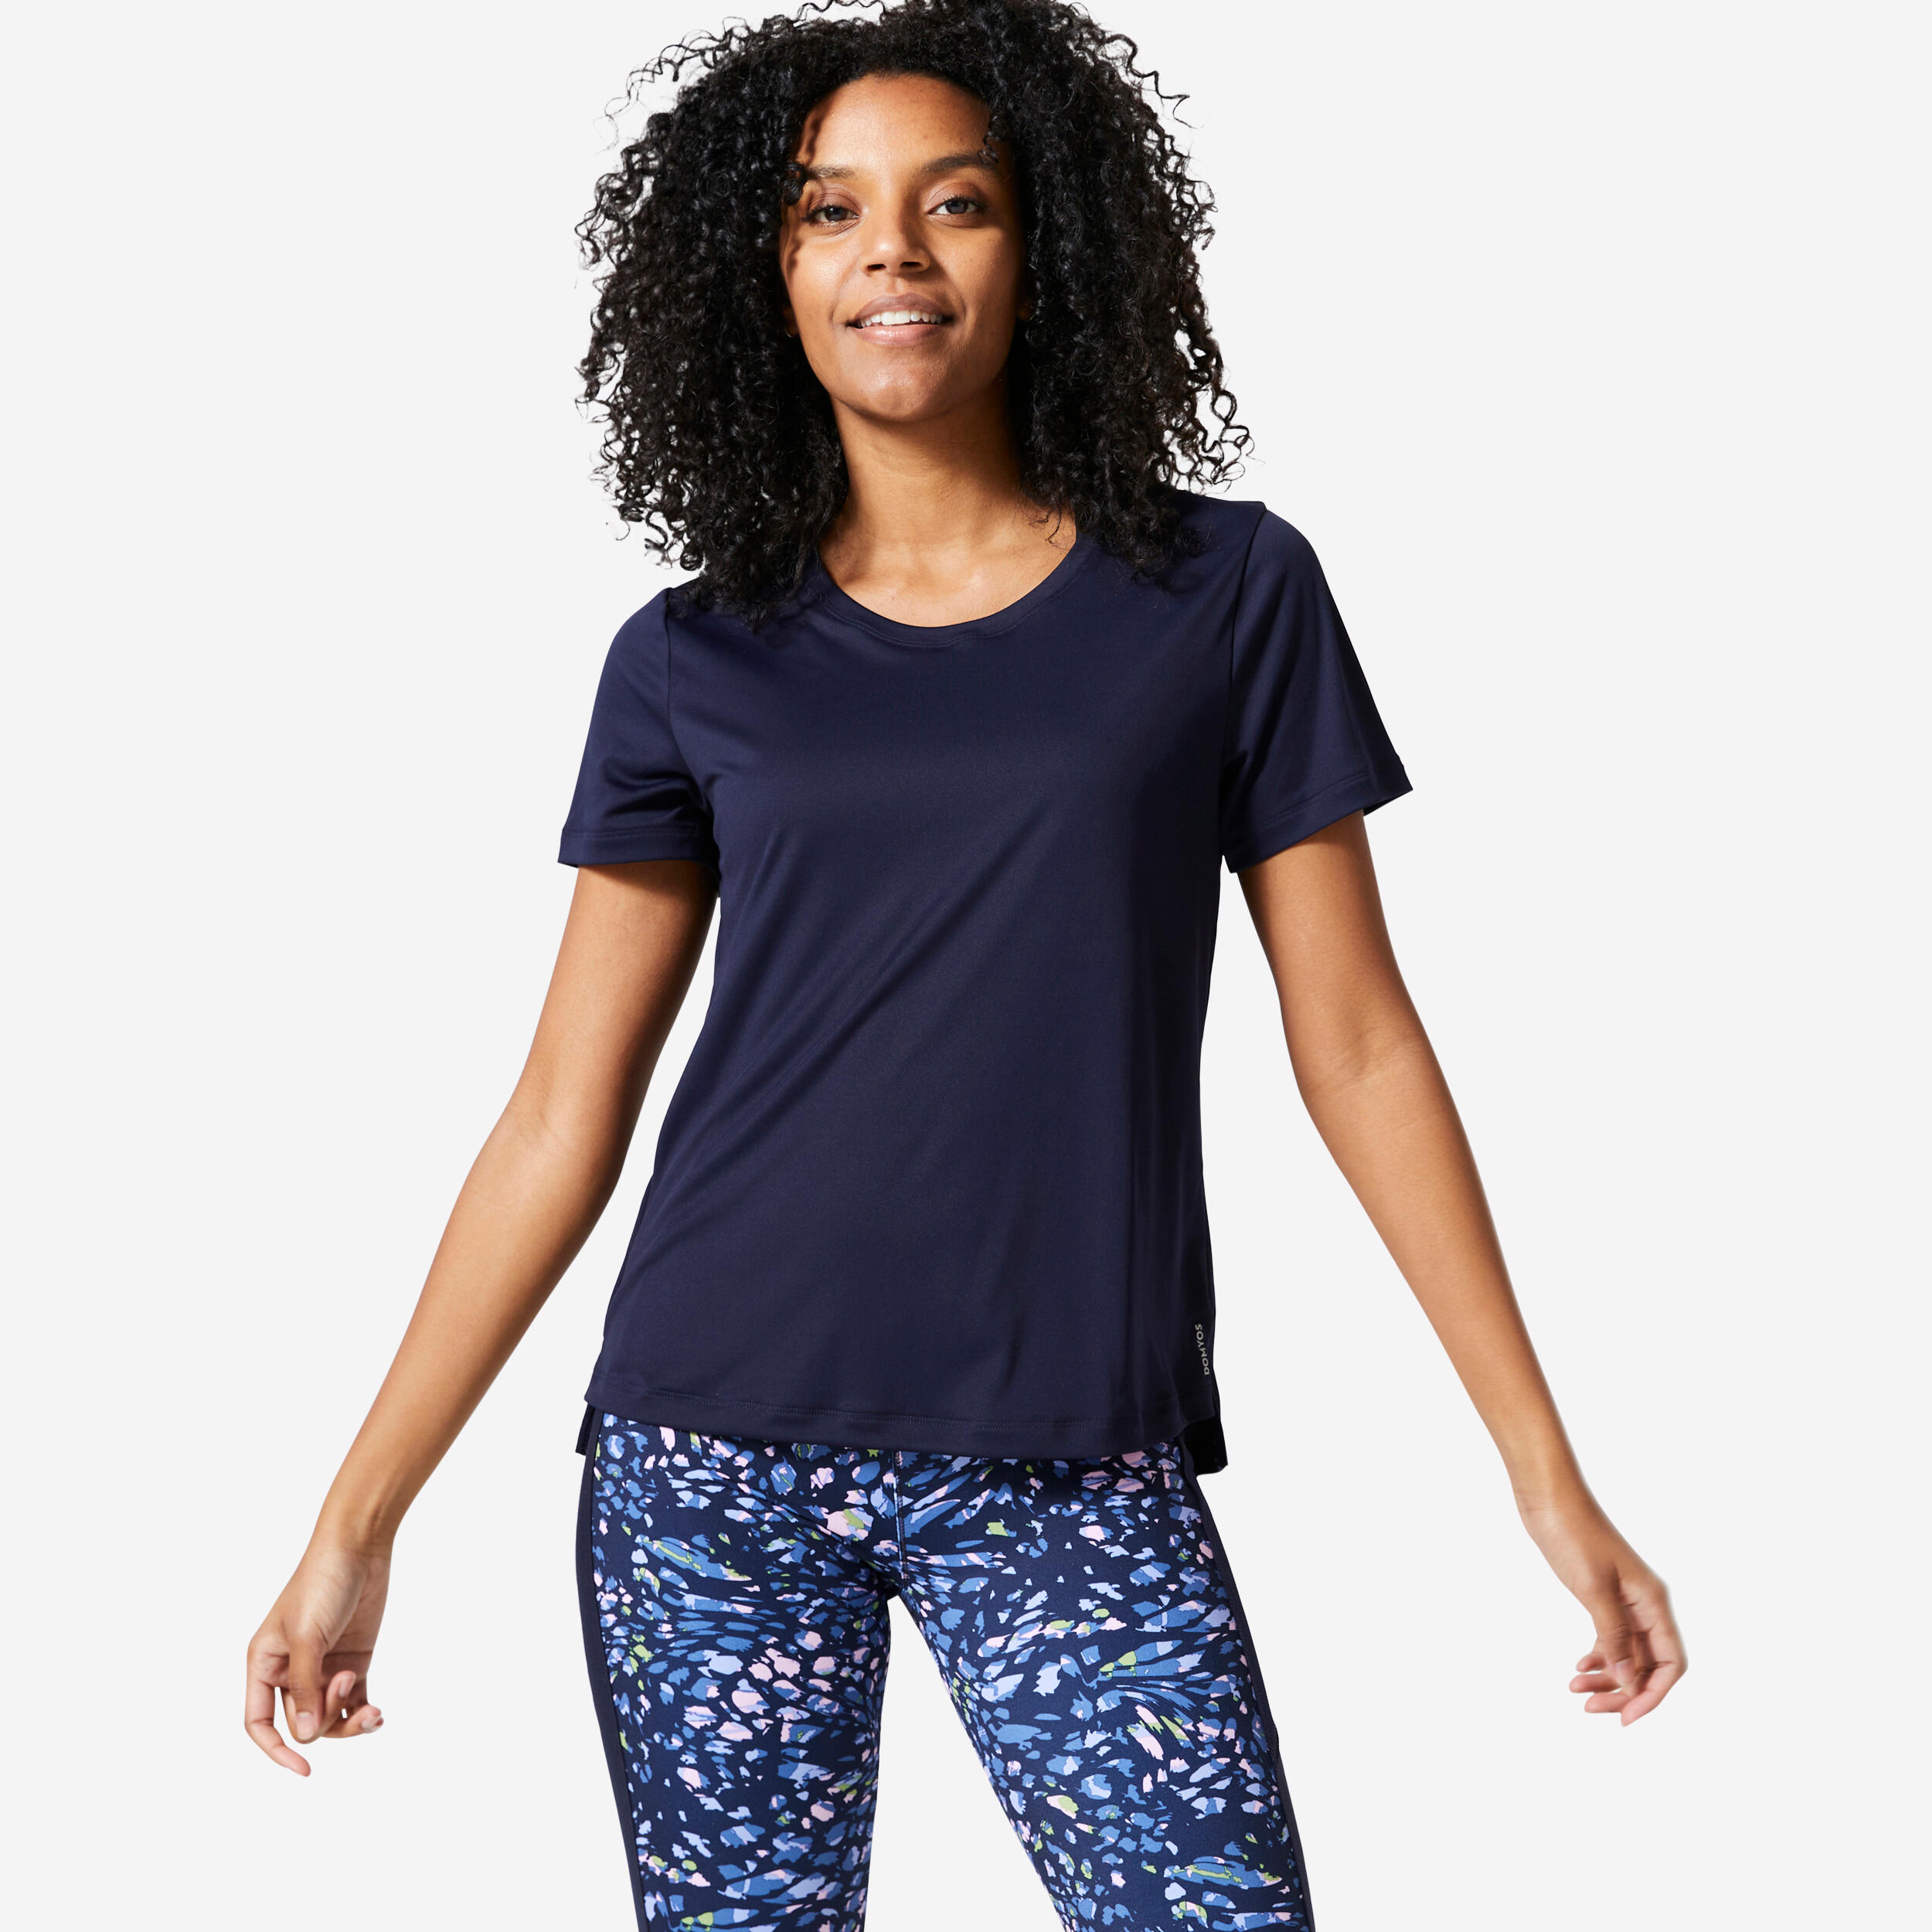 DOMYOS Women's Short-Sleeved Cardio Fitness T-Shirt - Navy Blue